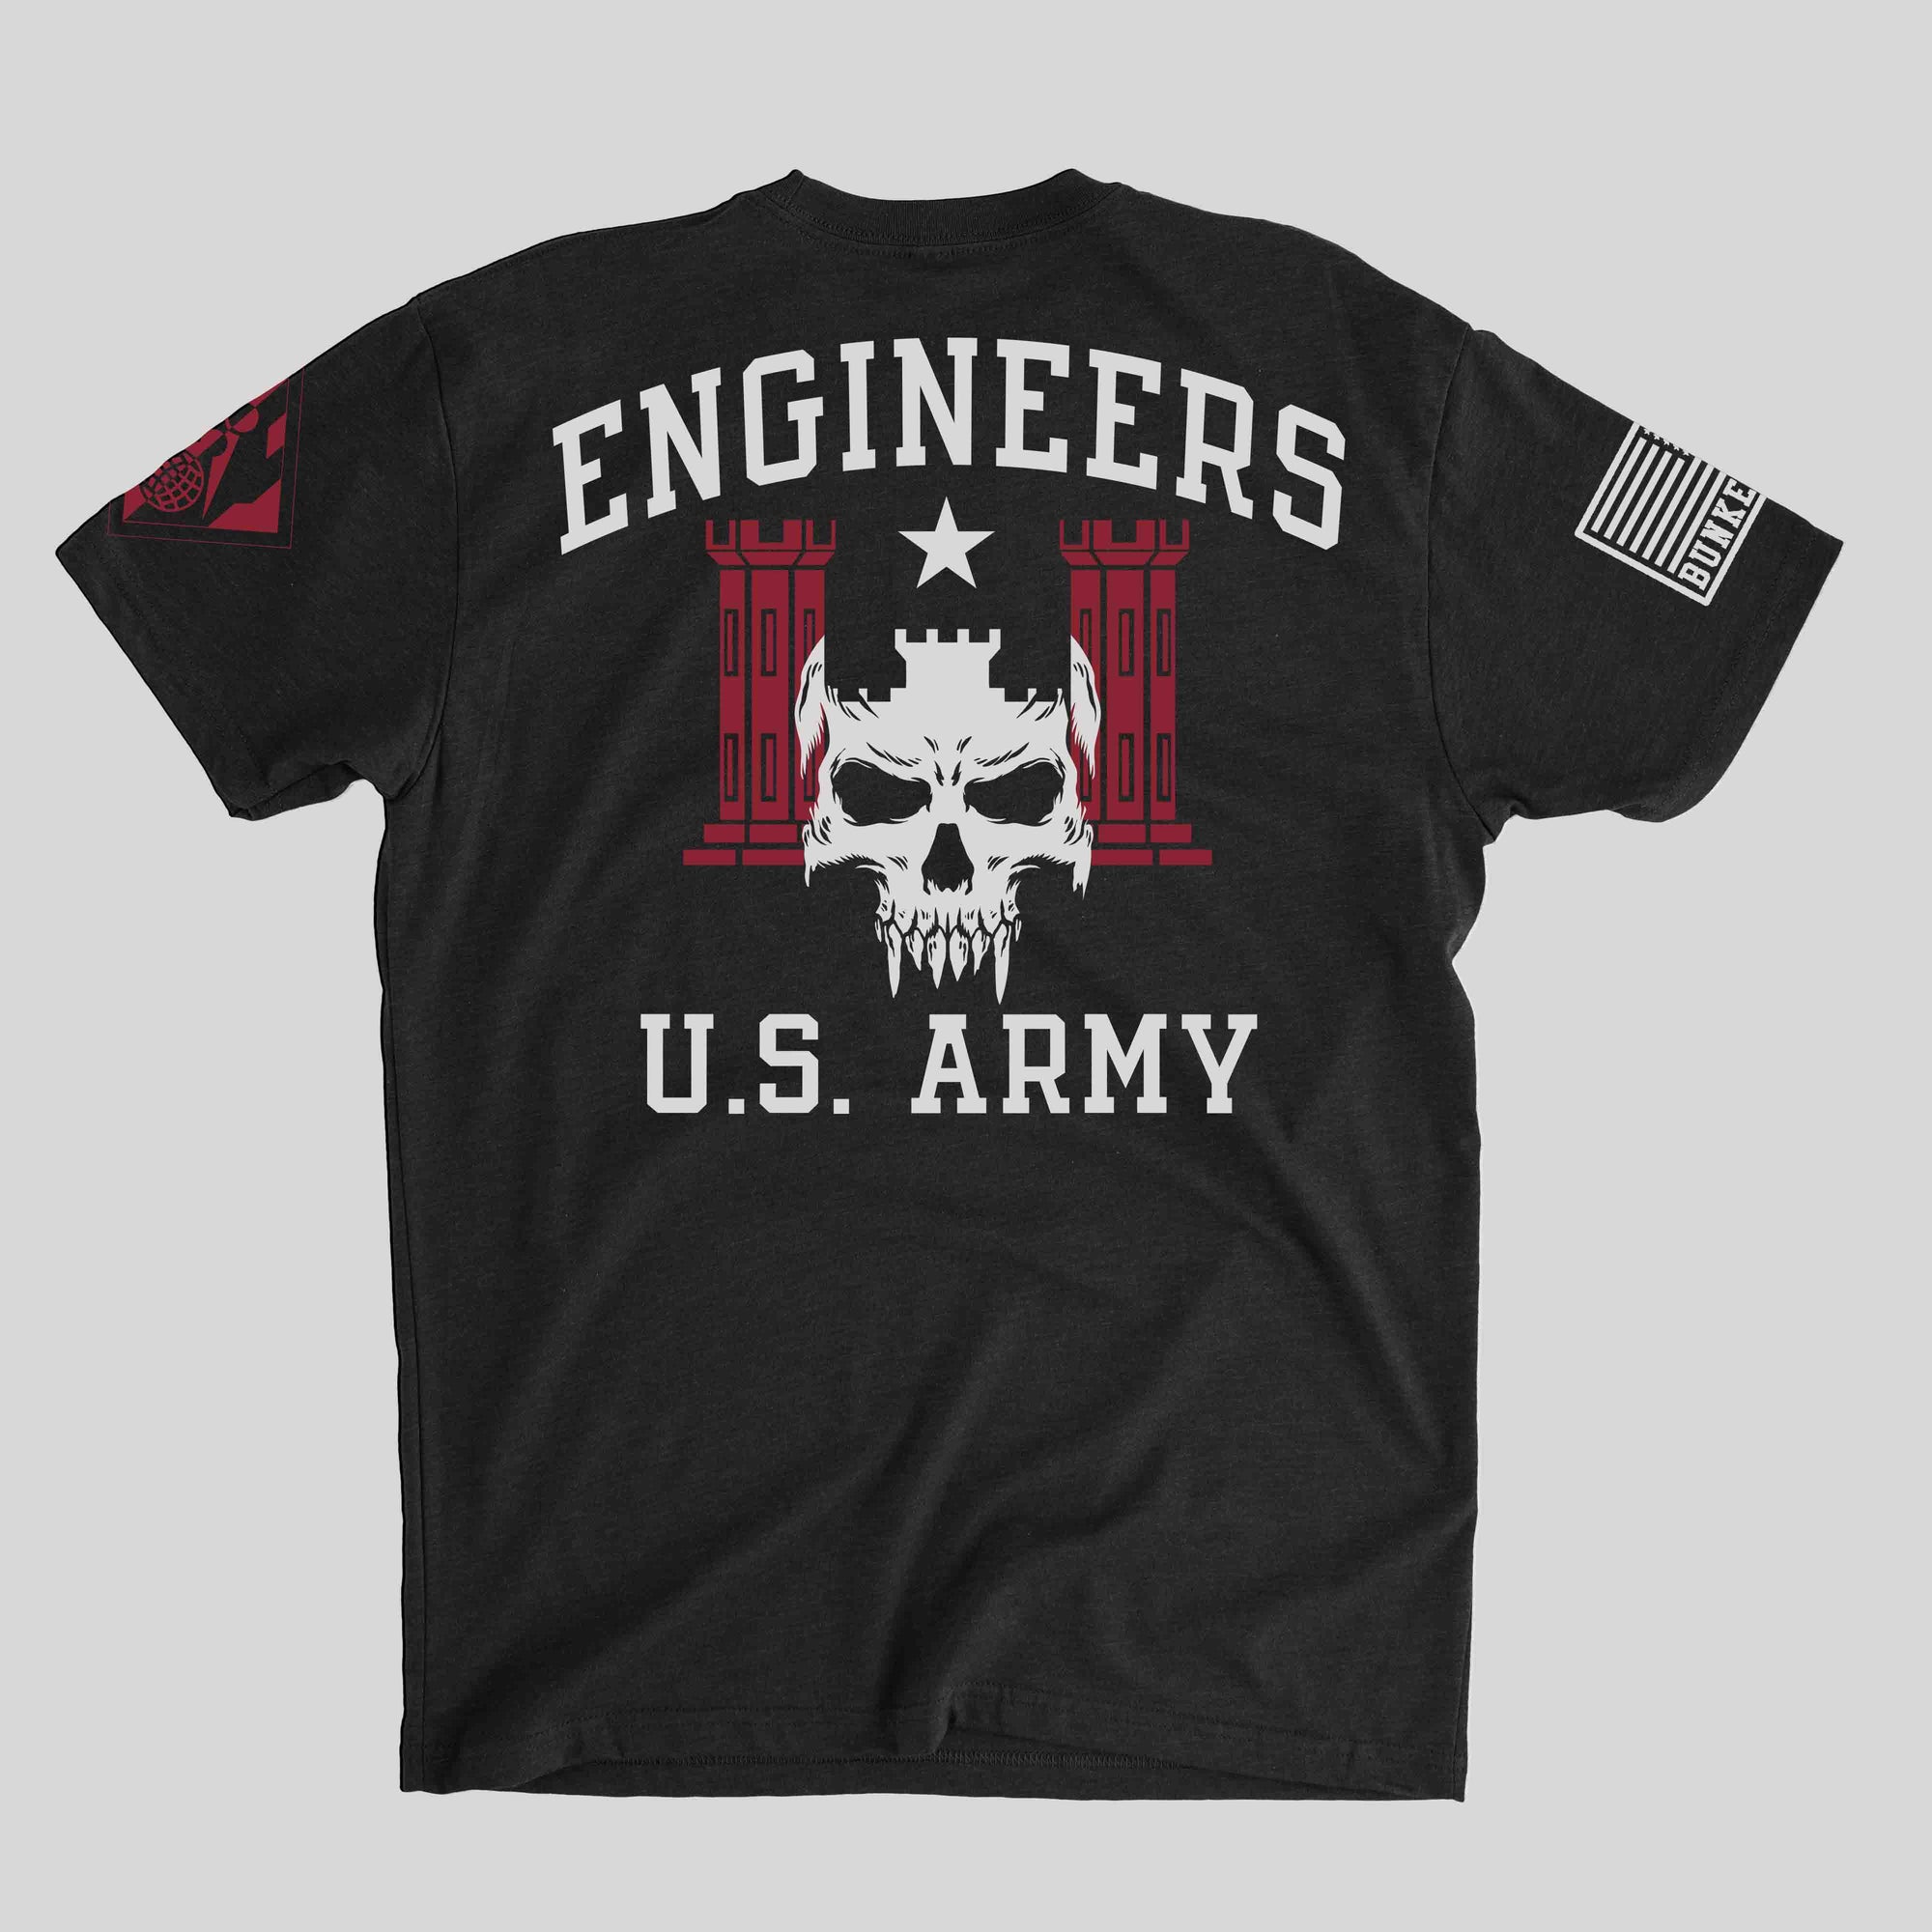 Engineers - Army